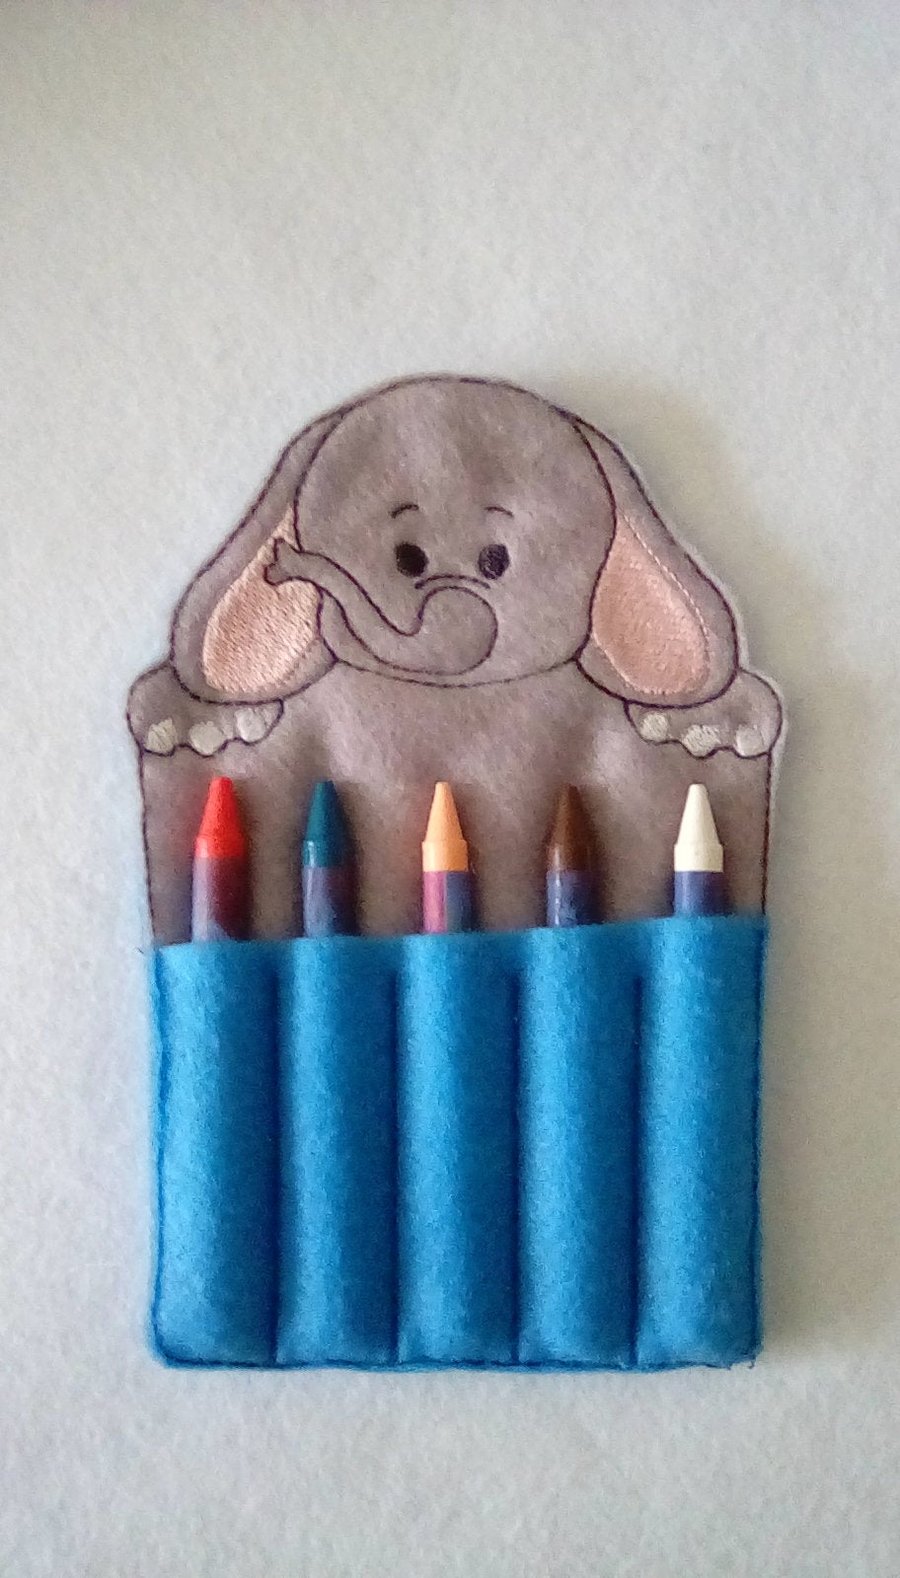 209. Elephant crayon holder.